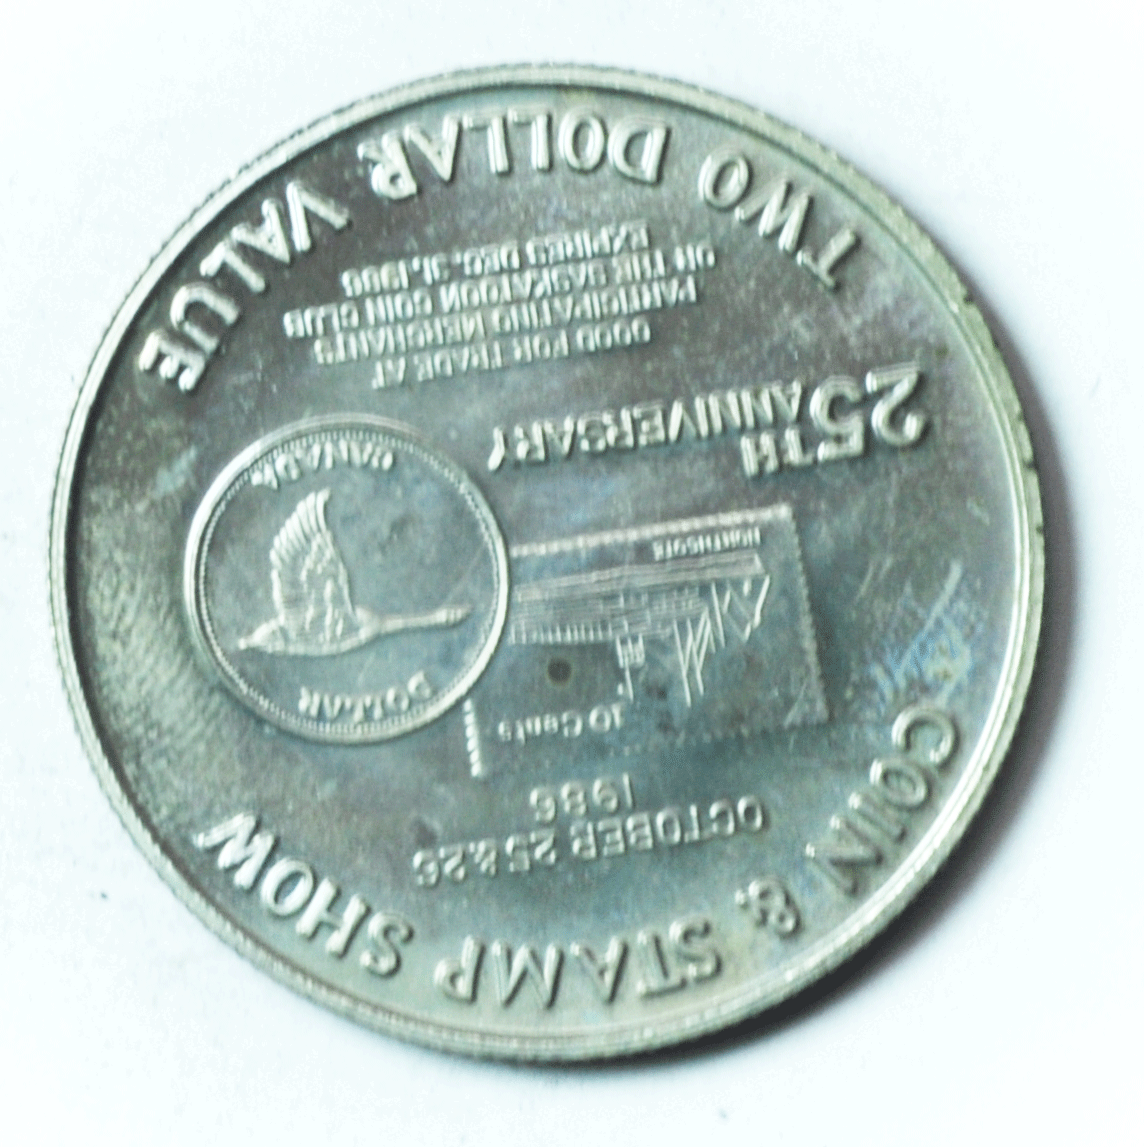 1986 $2 Saskatoon Coin Club 25th Anniversary Medal 38mm Stamp Show